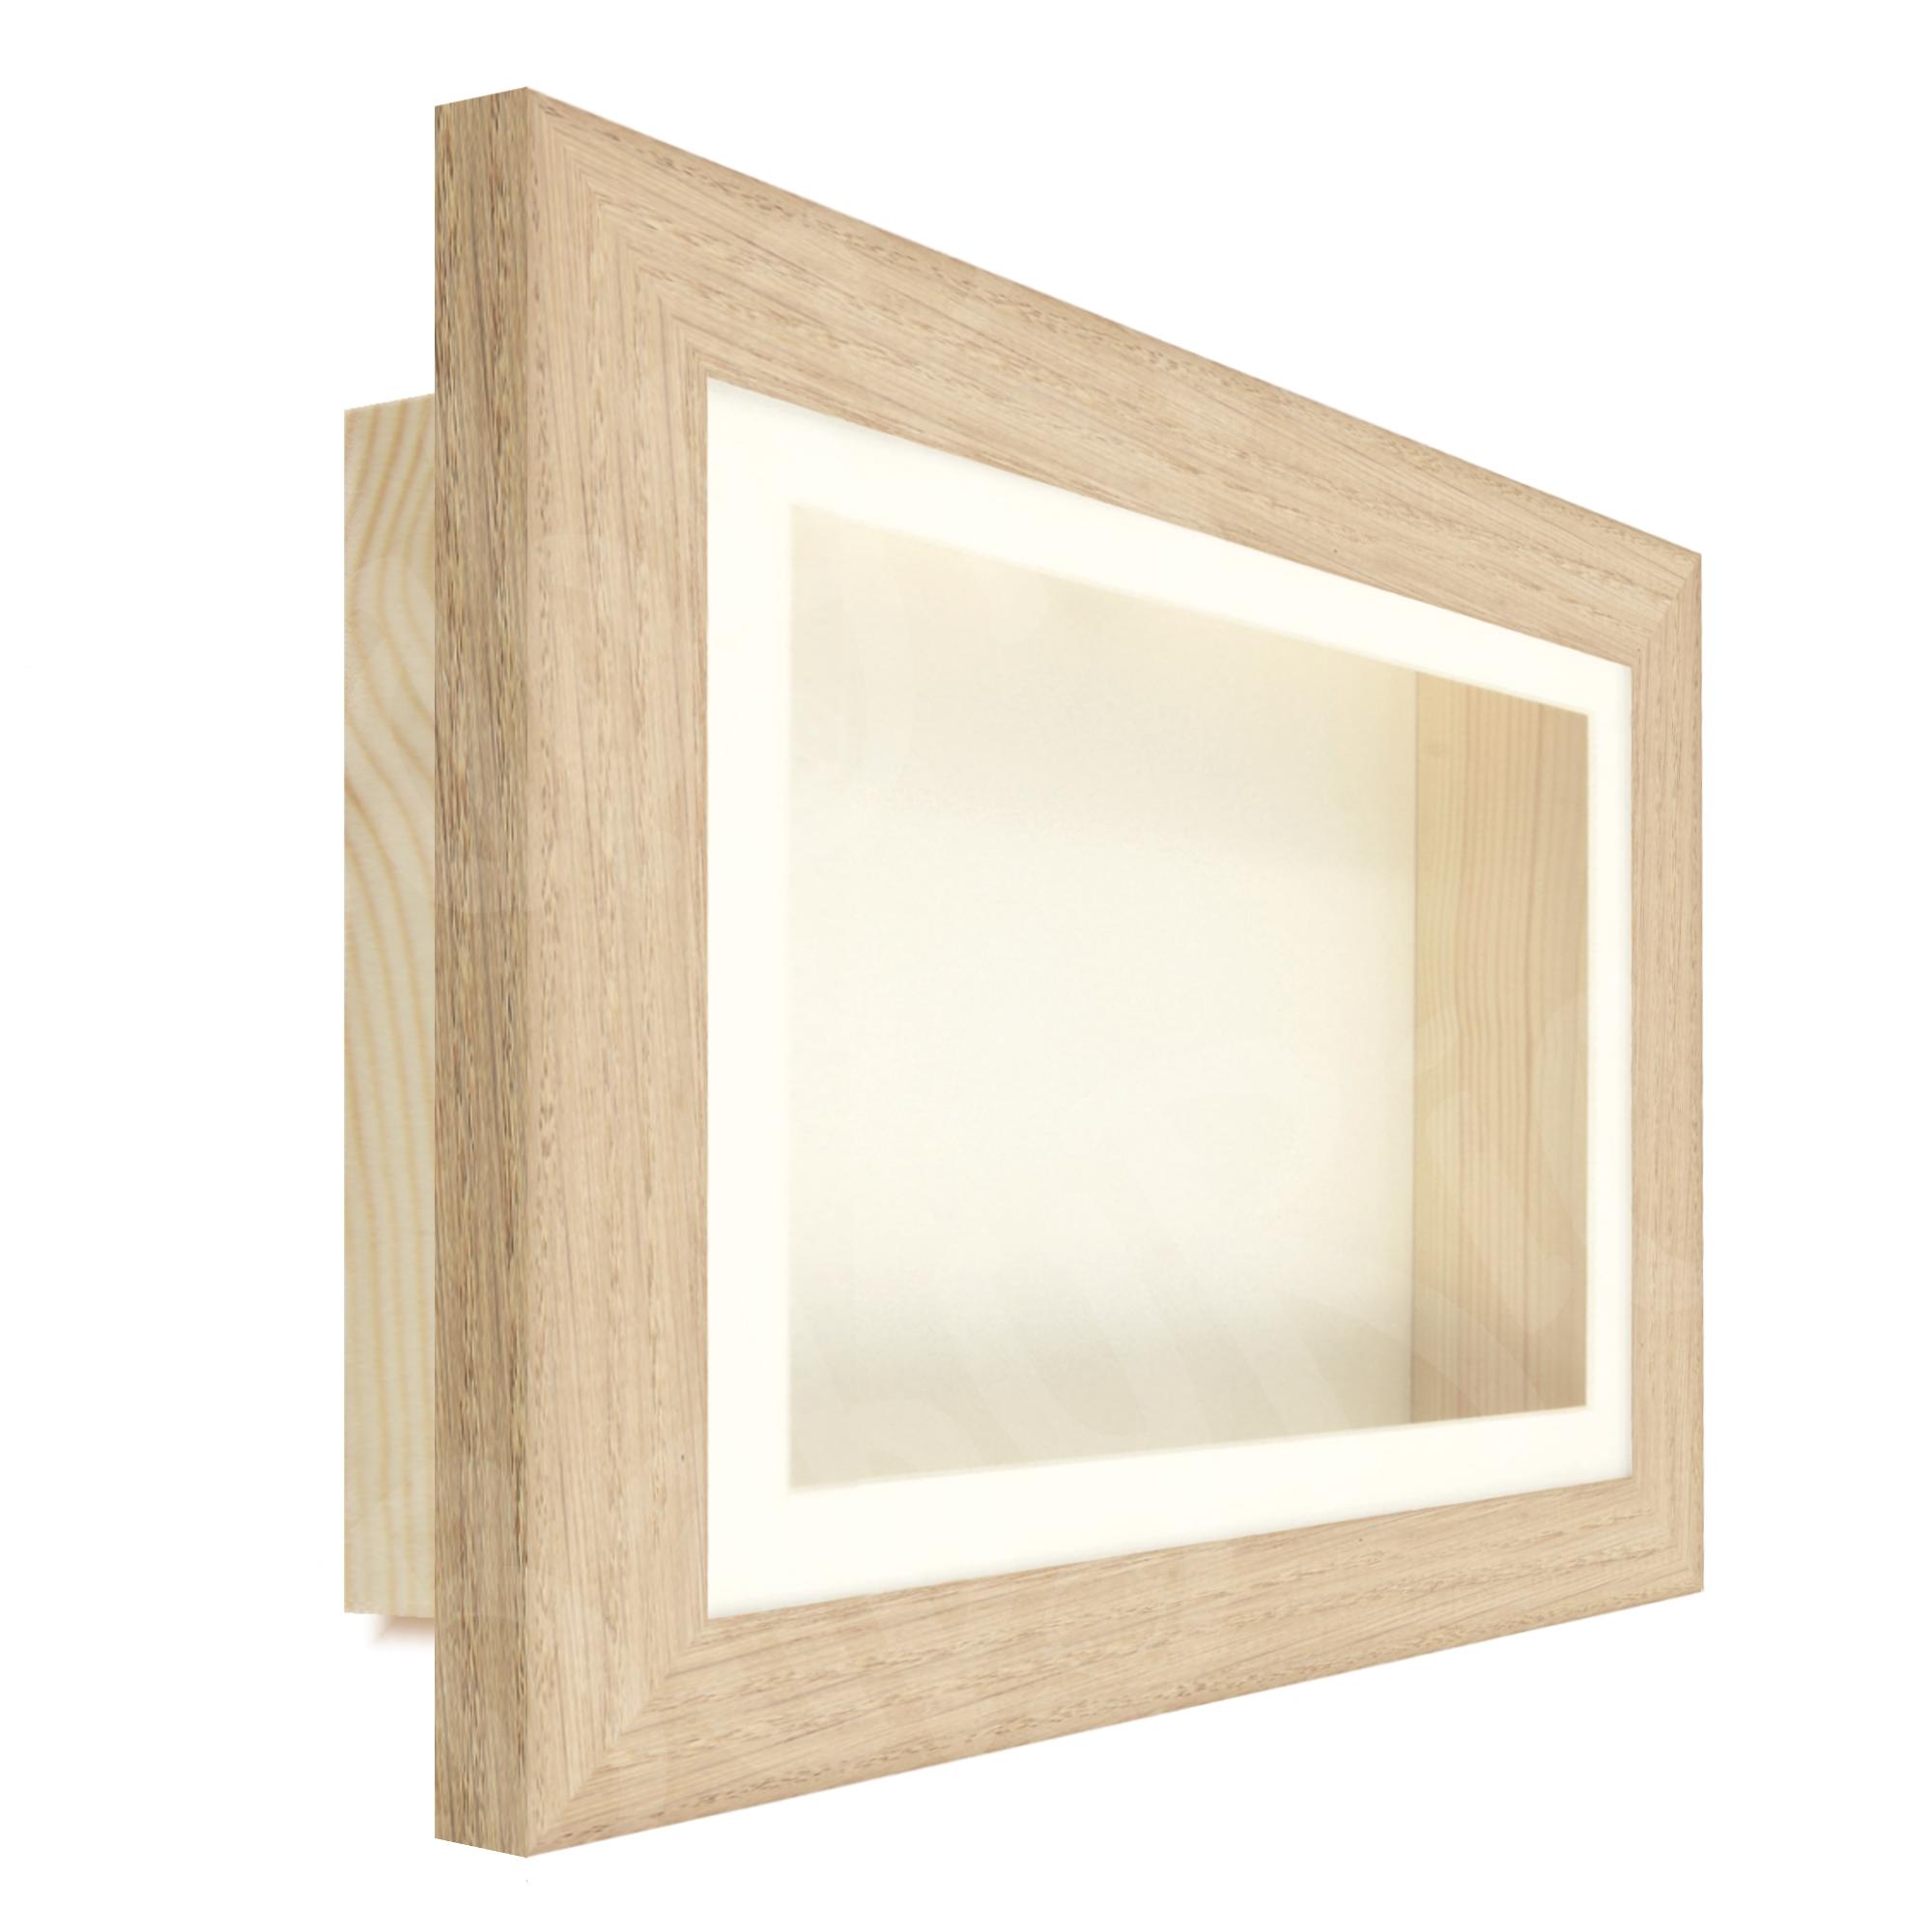 Solid Oak Wood Box Display Frame Cream Inserts